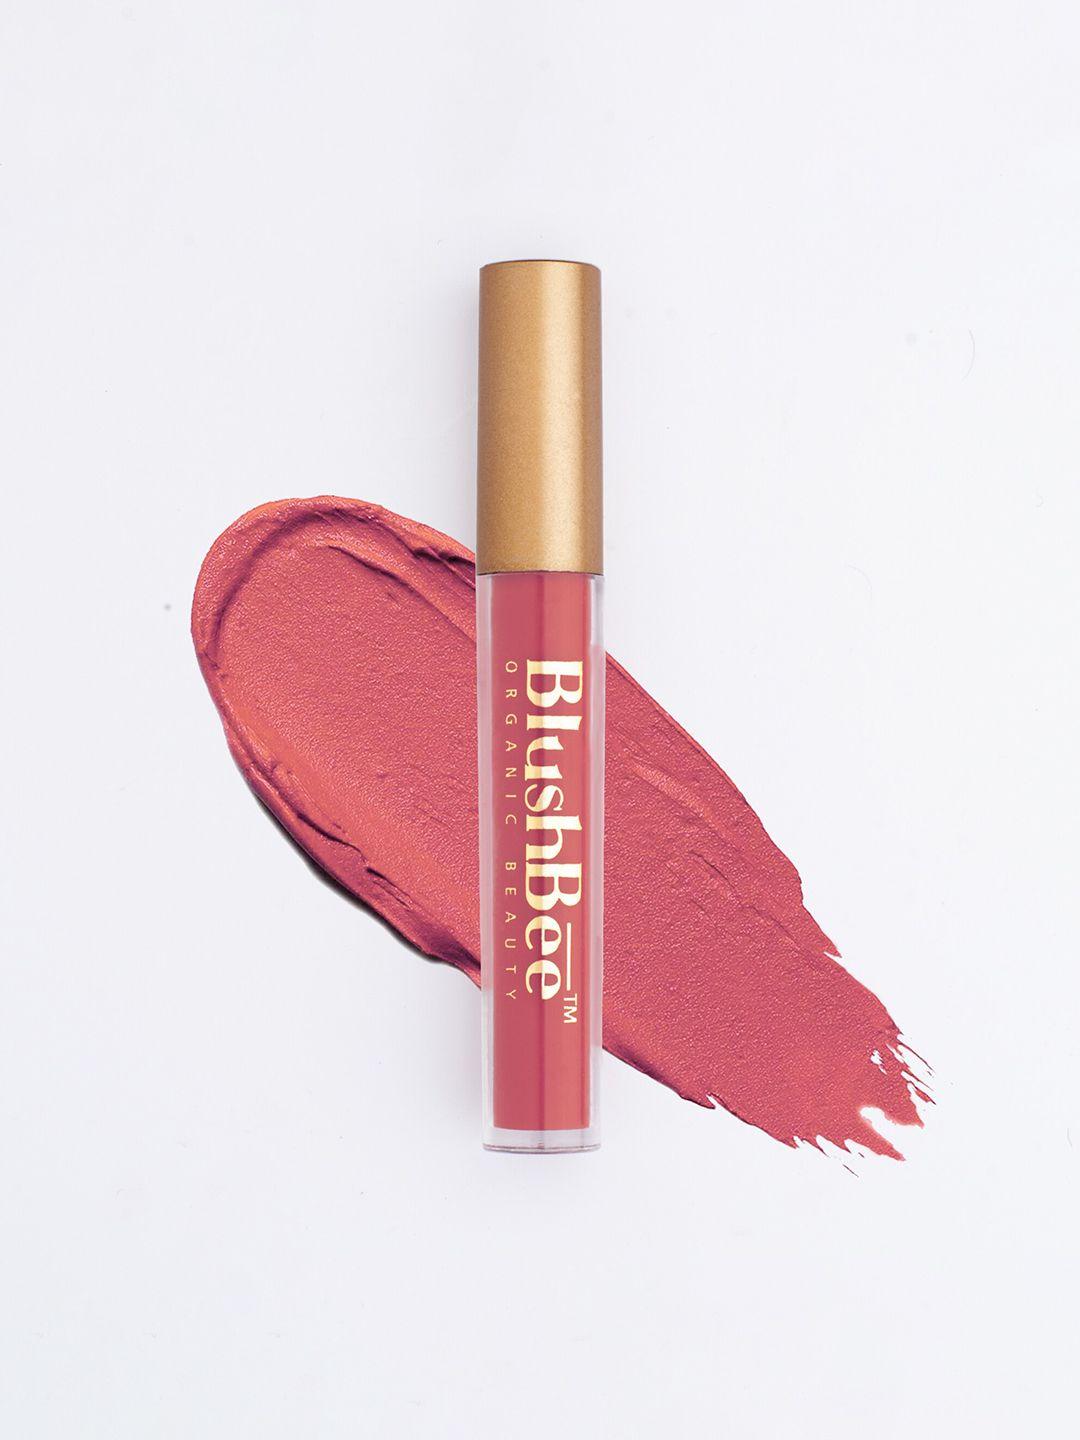 blushbee beauty highly pigmented vegan organic lip nourishing liquid lipstick 5 ml - hbd